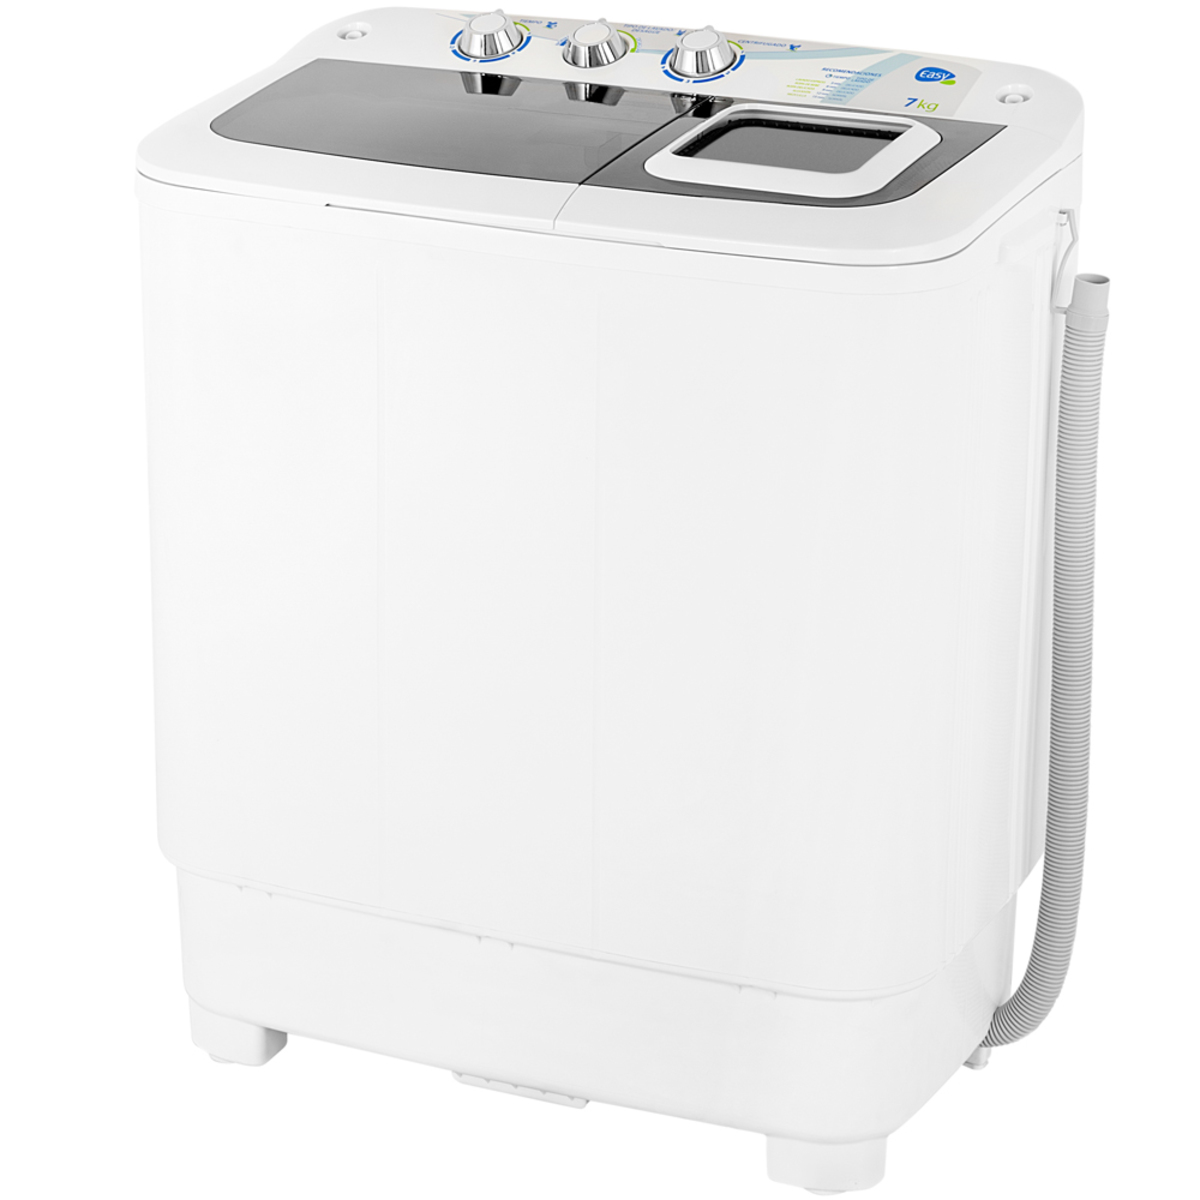 Lavadora Semi-Automática Doble Tanque de 7 kg Blanca, Home & Co, LAVADORAS, LAVADORAS, LINEA BLANCA, HOGAR